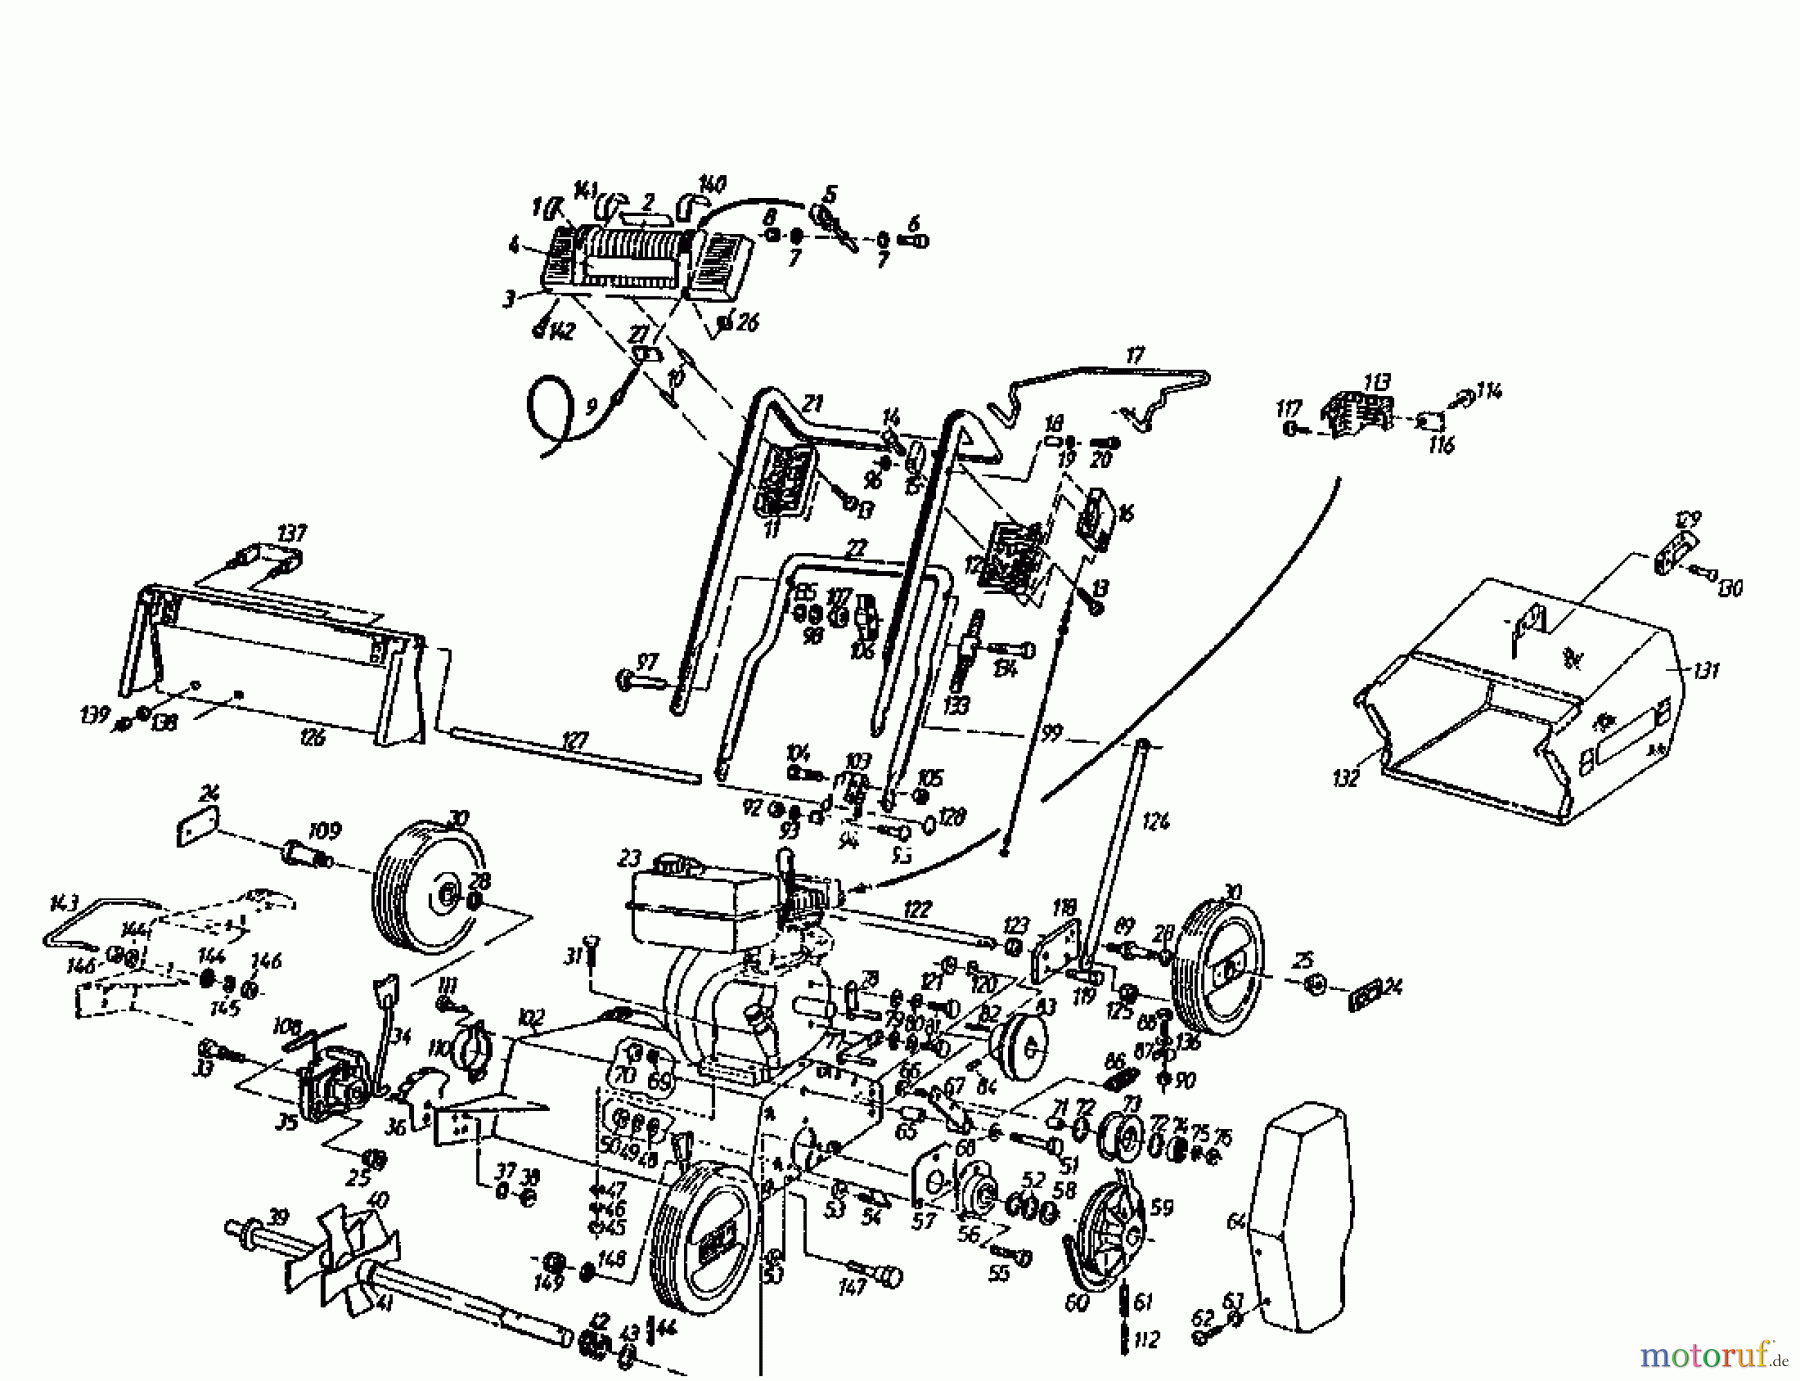  Gutbrod Petrol verticutter MV 404 04010.01  (1993) Basic machine